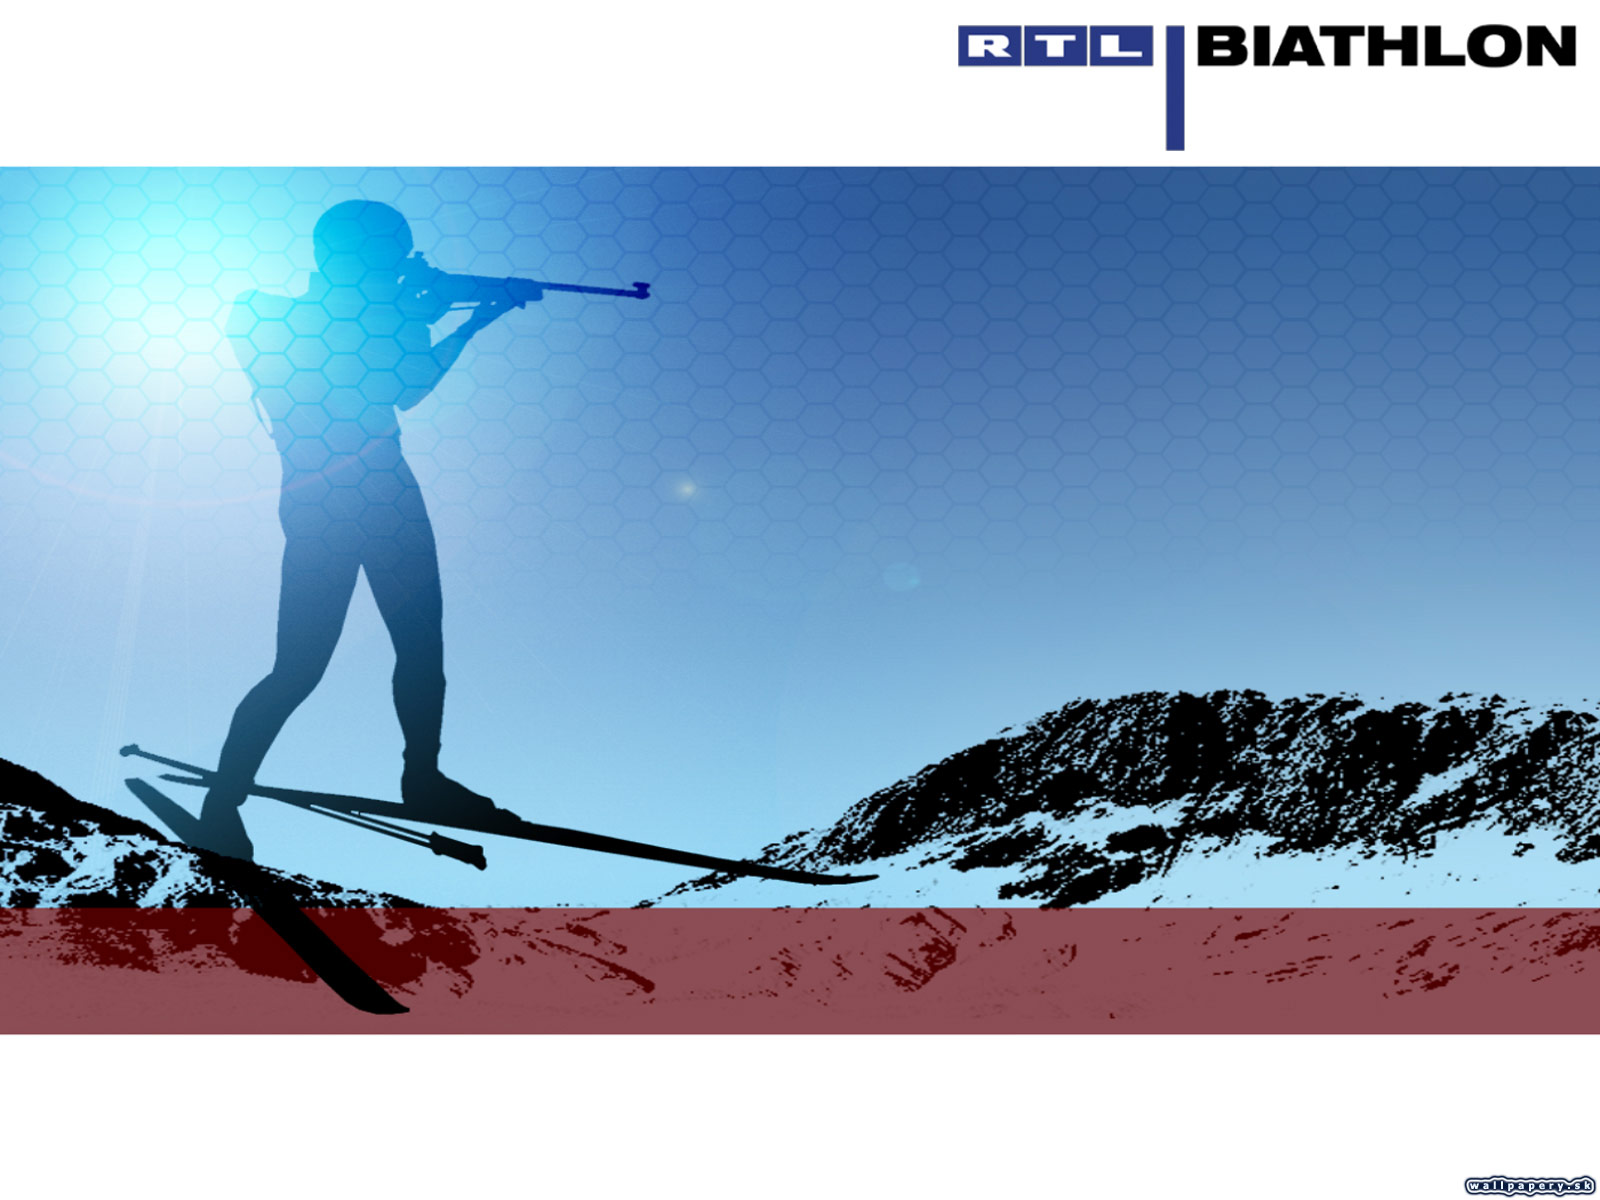 RTL Biathlon 2009 - wallpaper 2